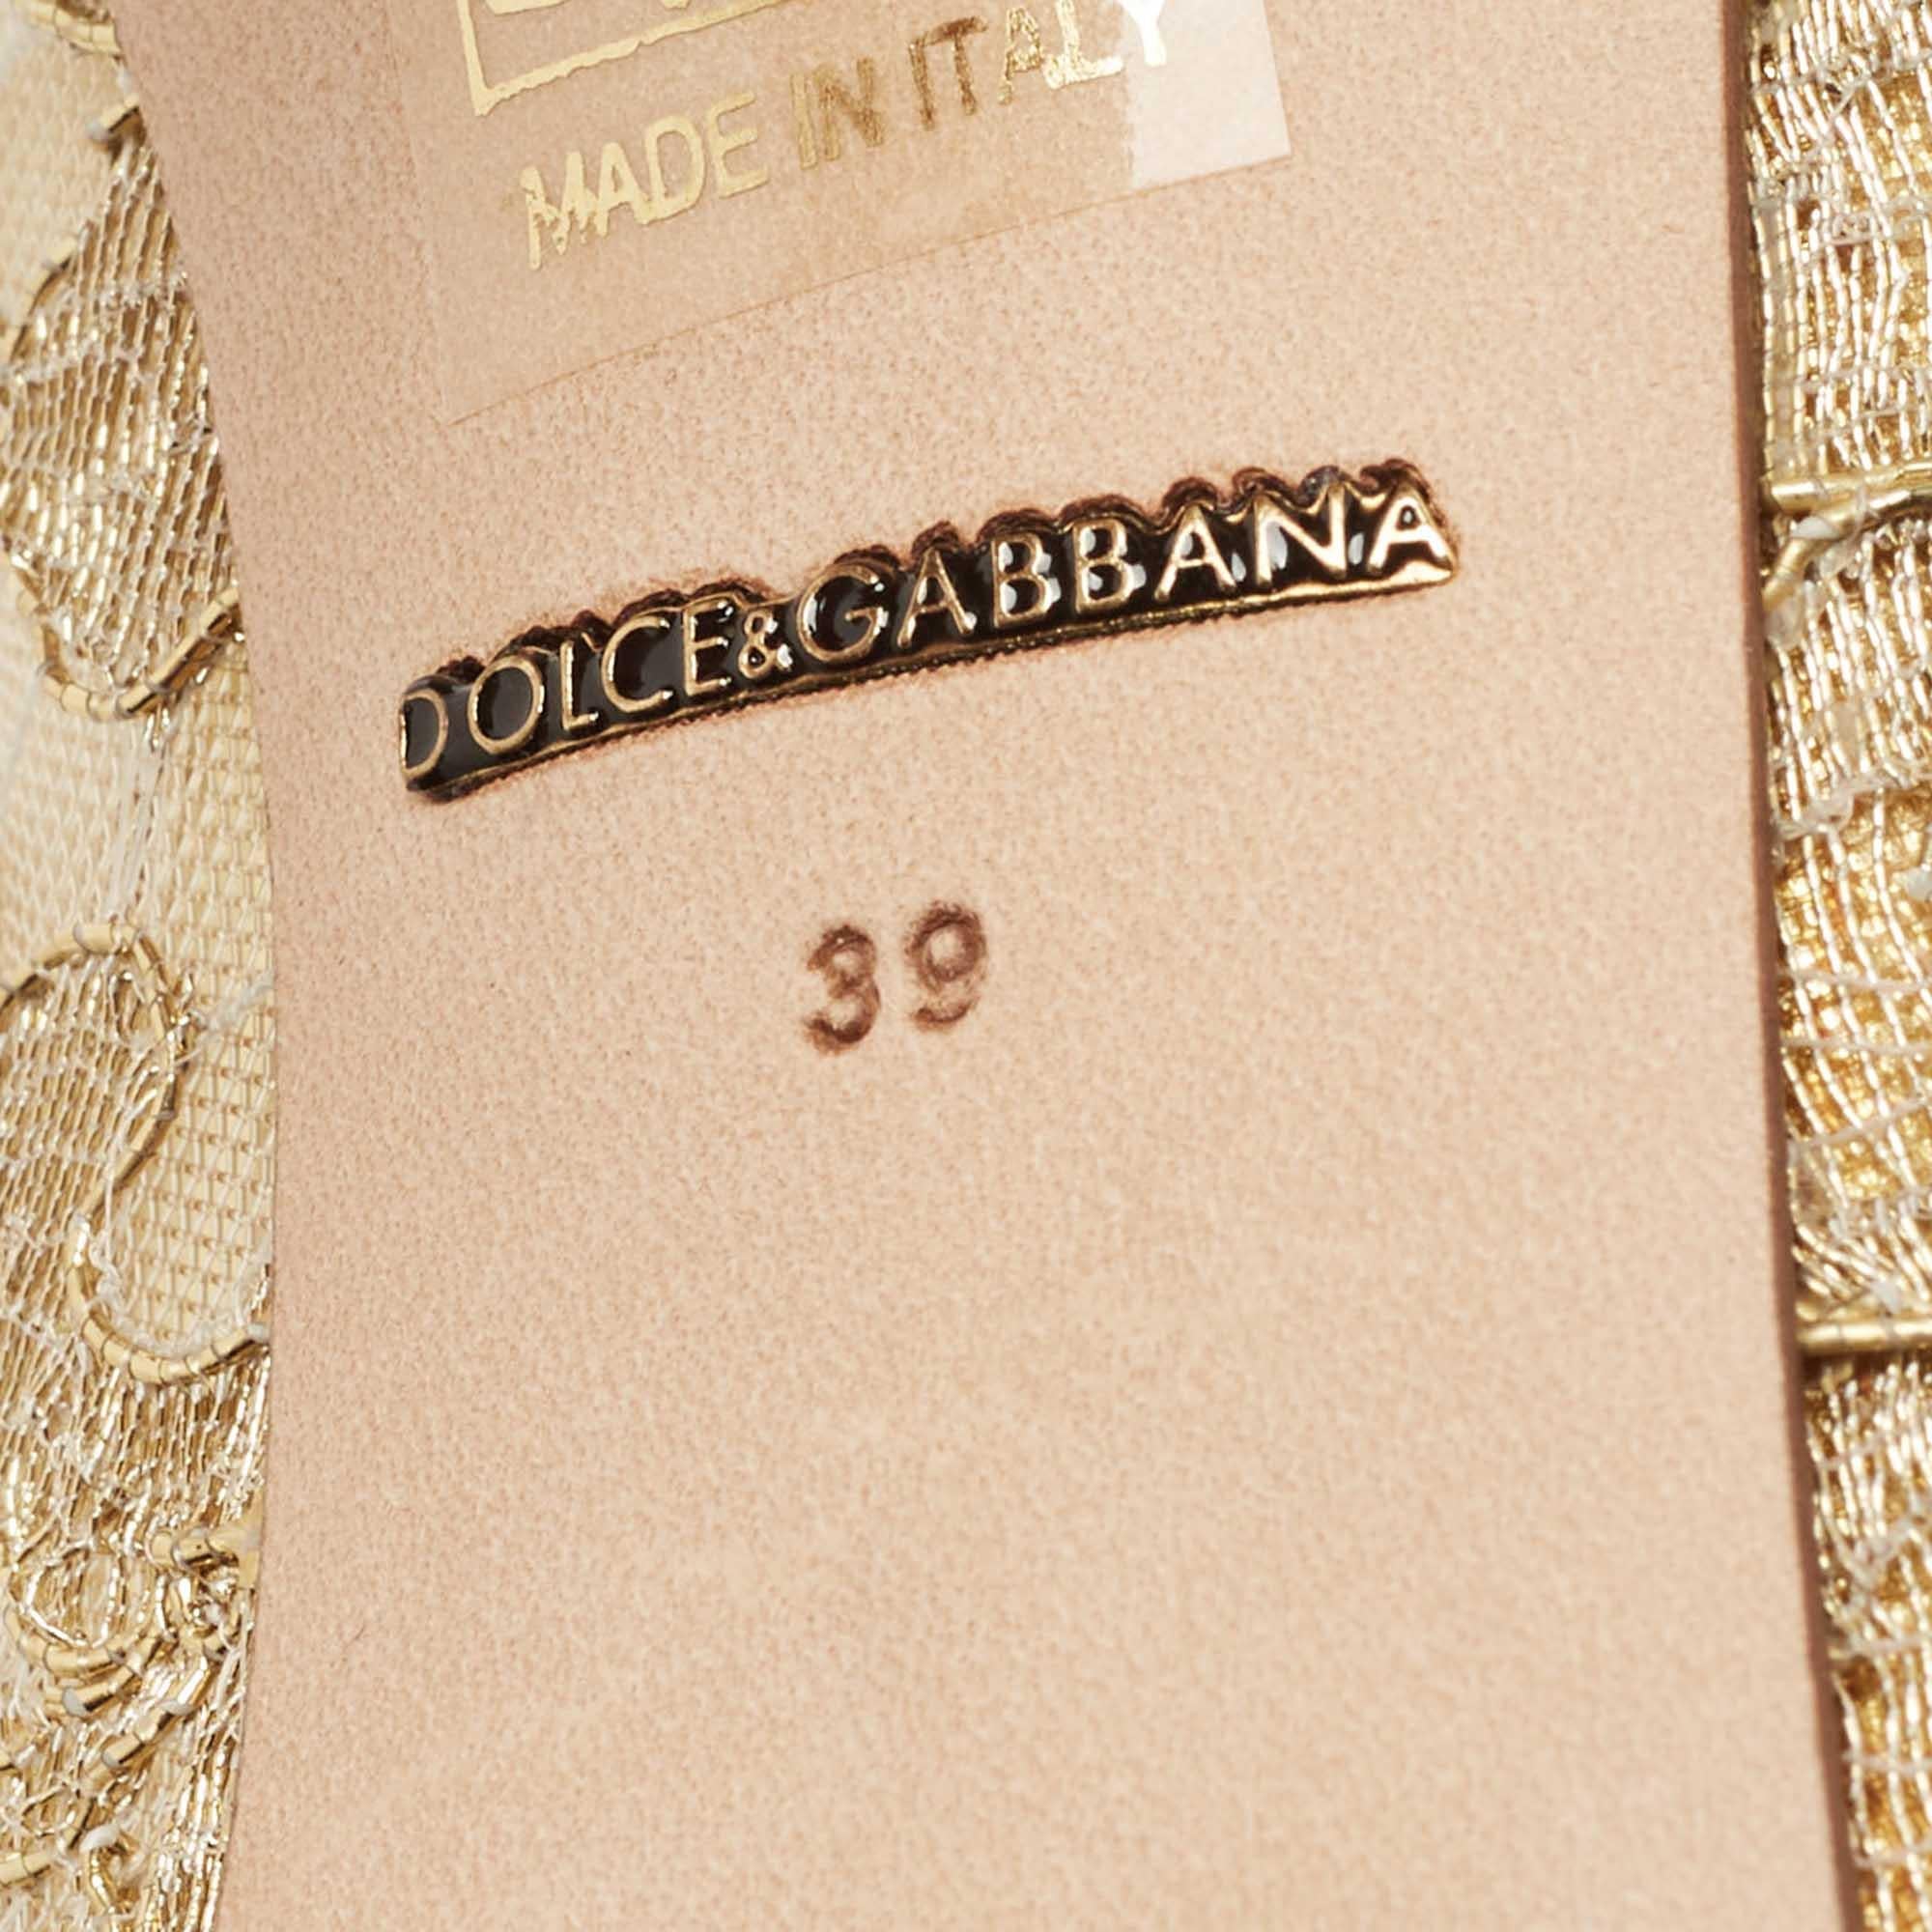 Dolce & Gabbana Gold Lace Bellucci Crystal Embellished Pumps Size 39 4